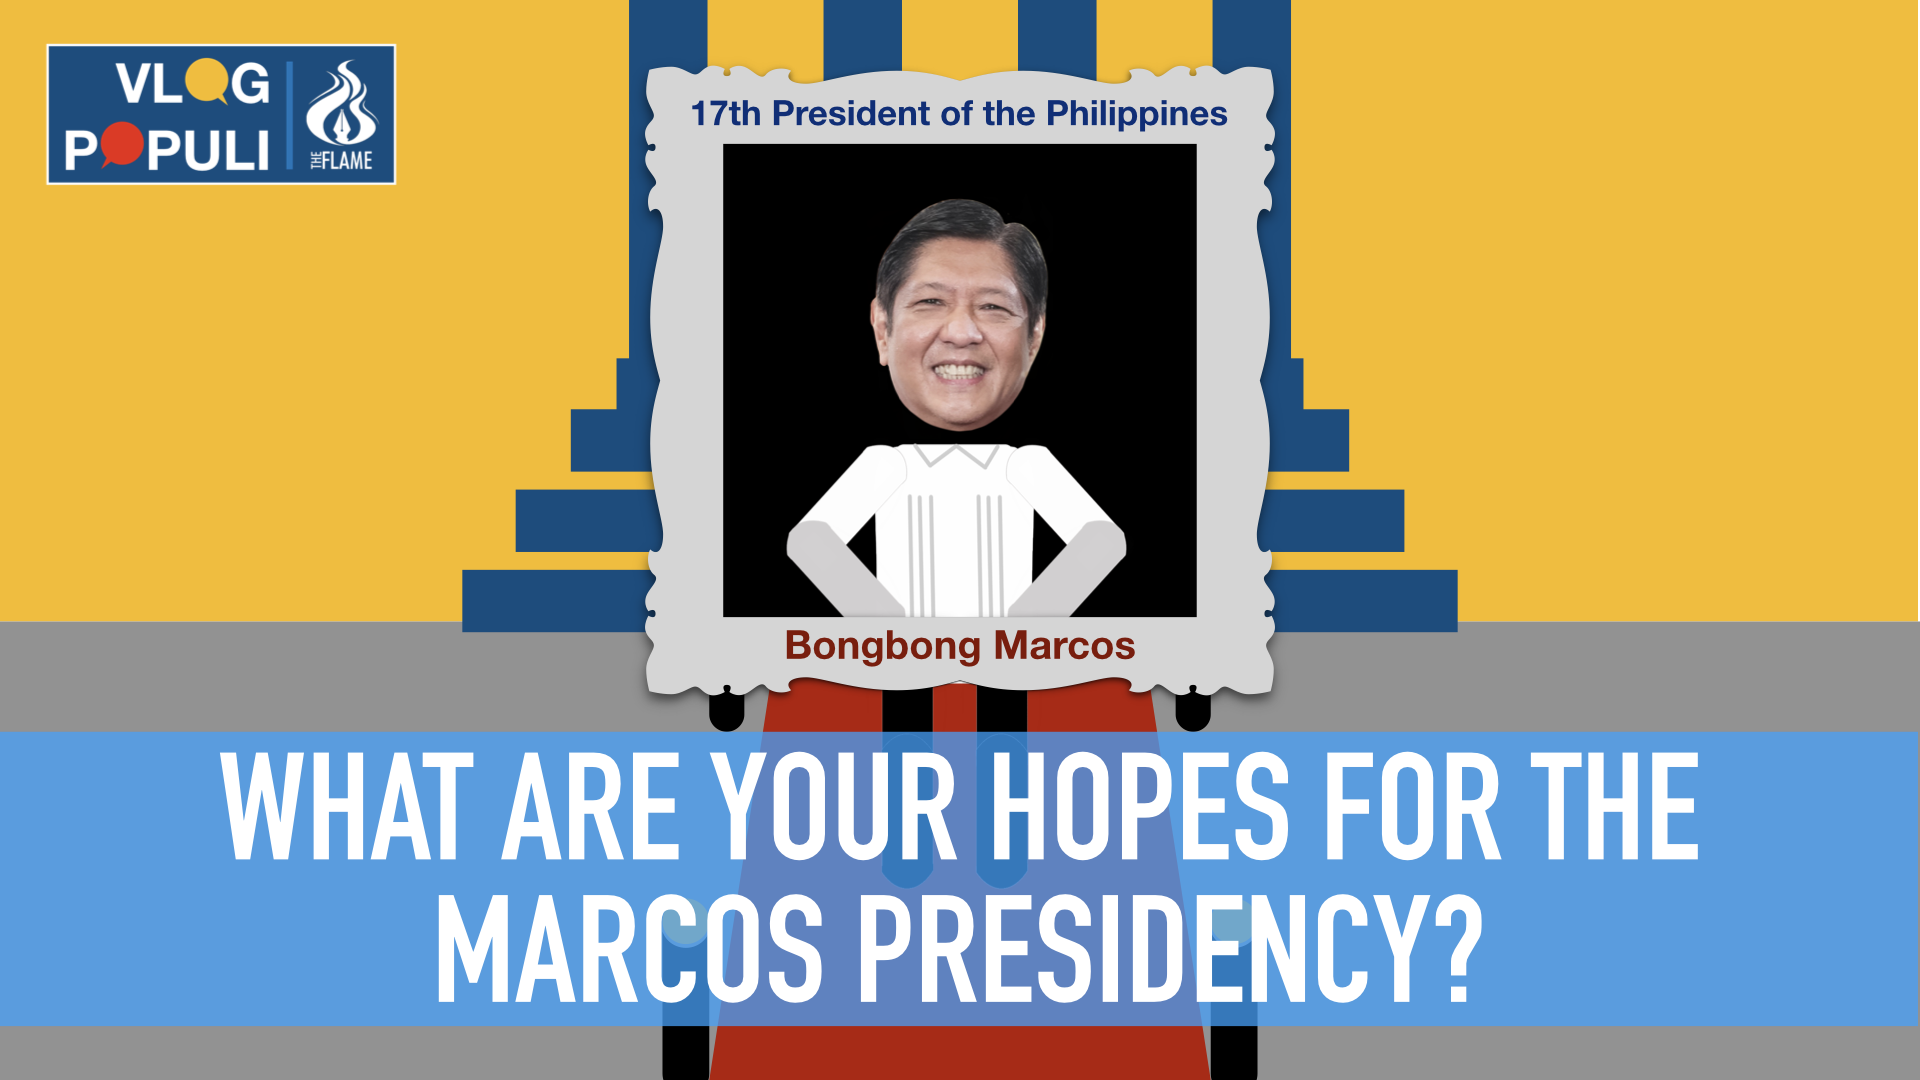 VLOG POPULI: Thomasians’ hopes for the Marcos Jr. presidency